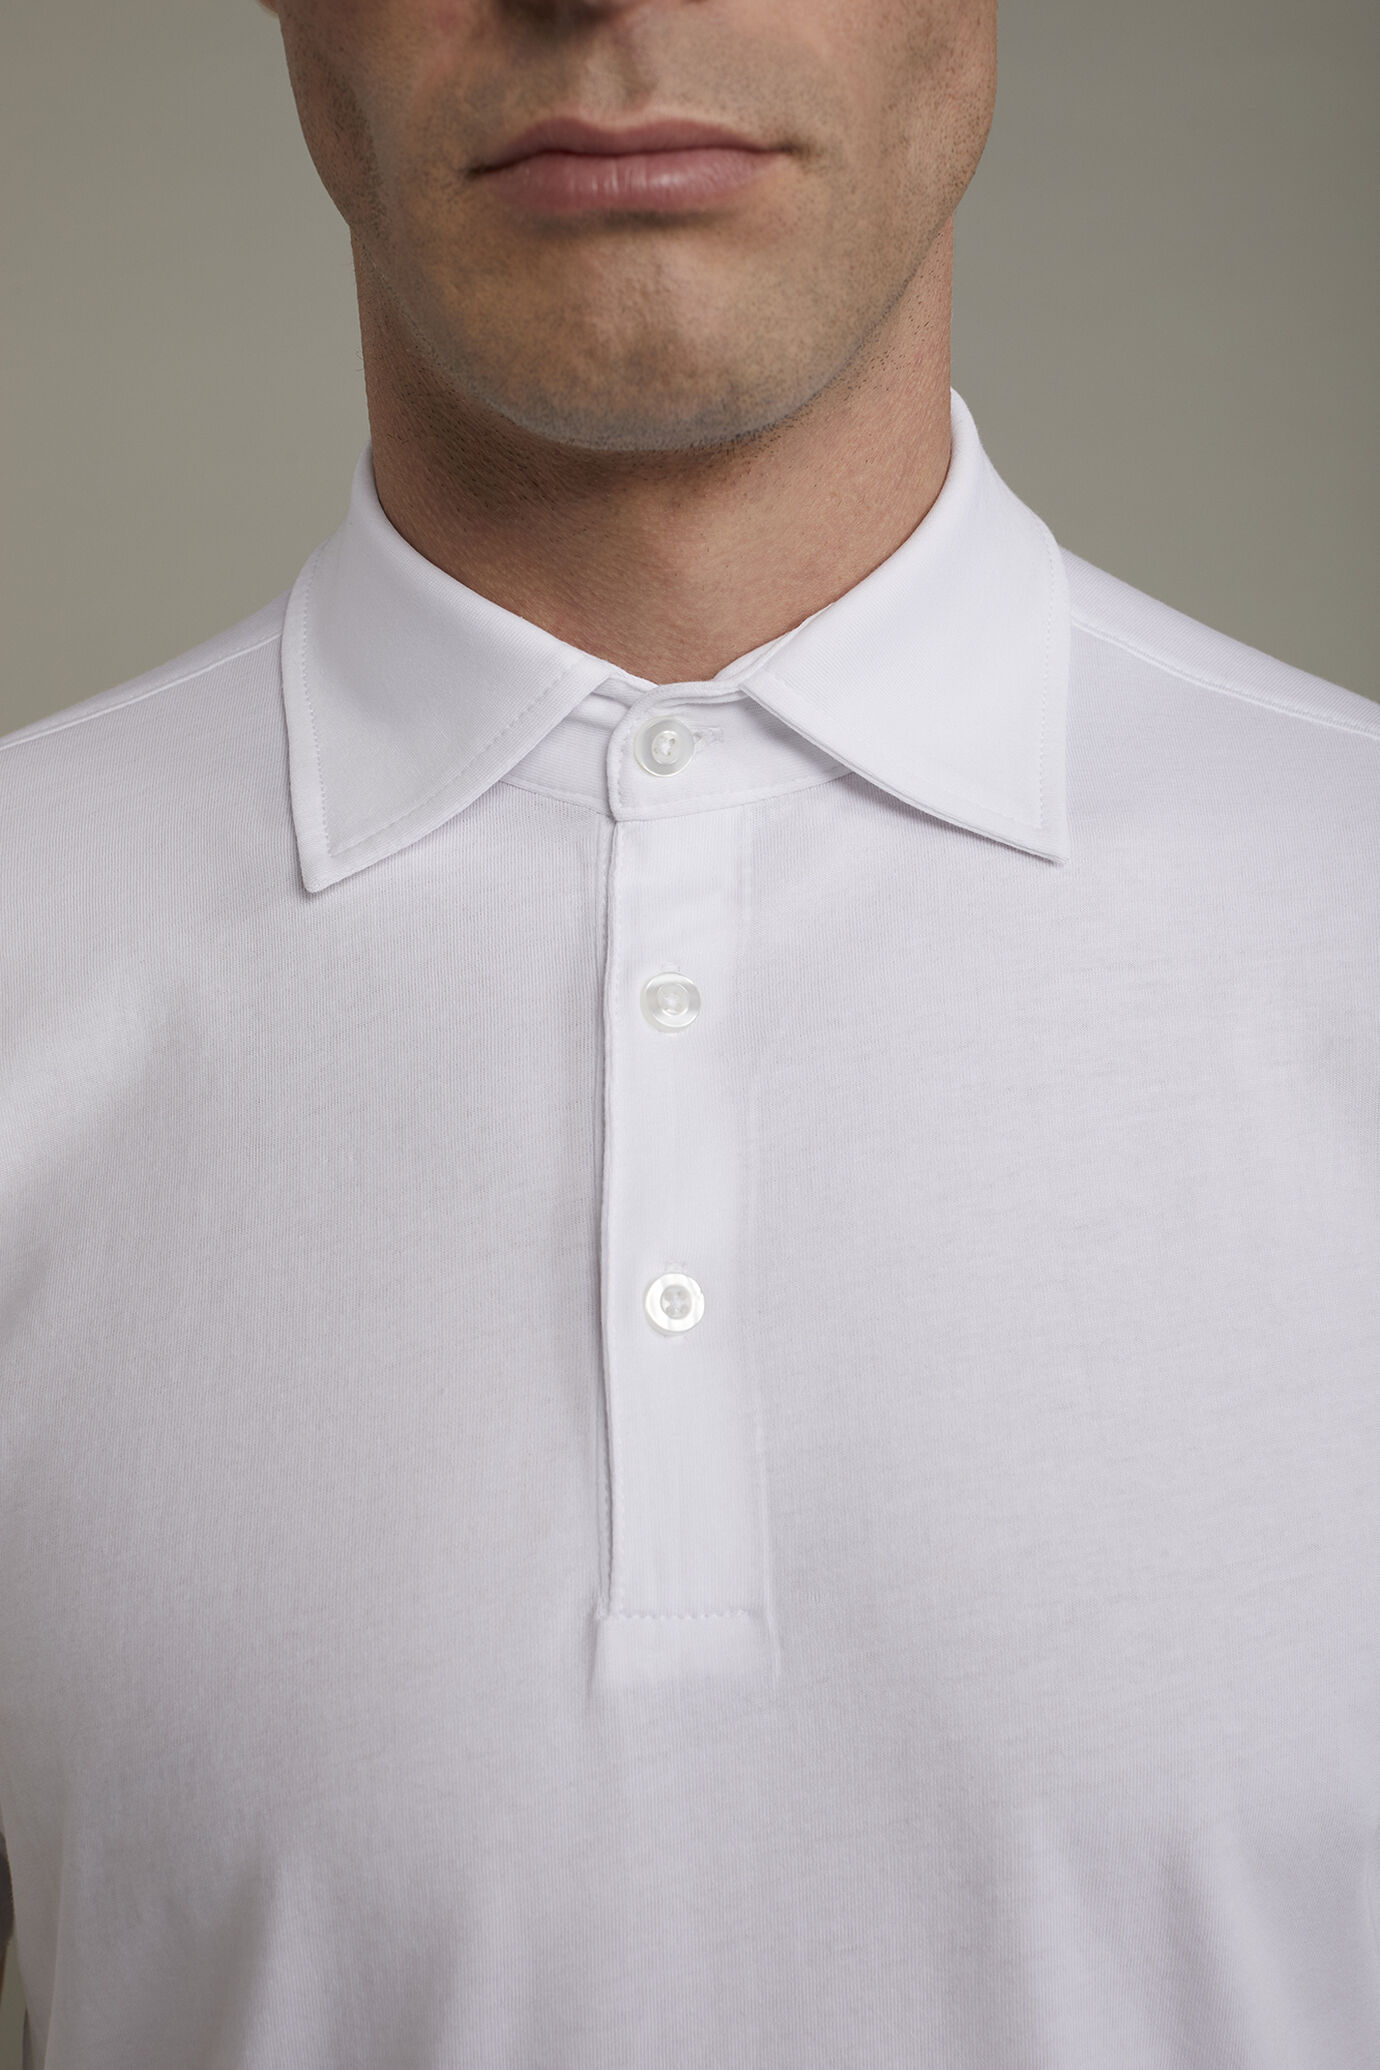 Men’s polo shirt short sleeves 100% supima cotton regular fit image number 3